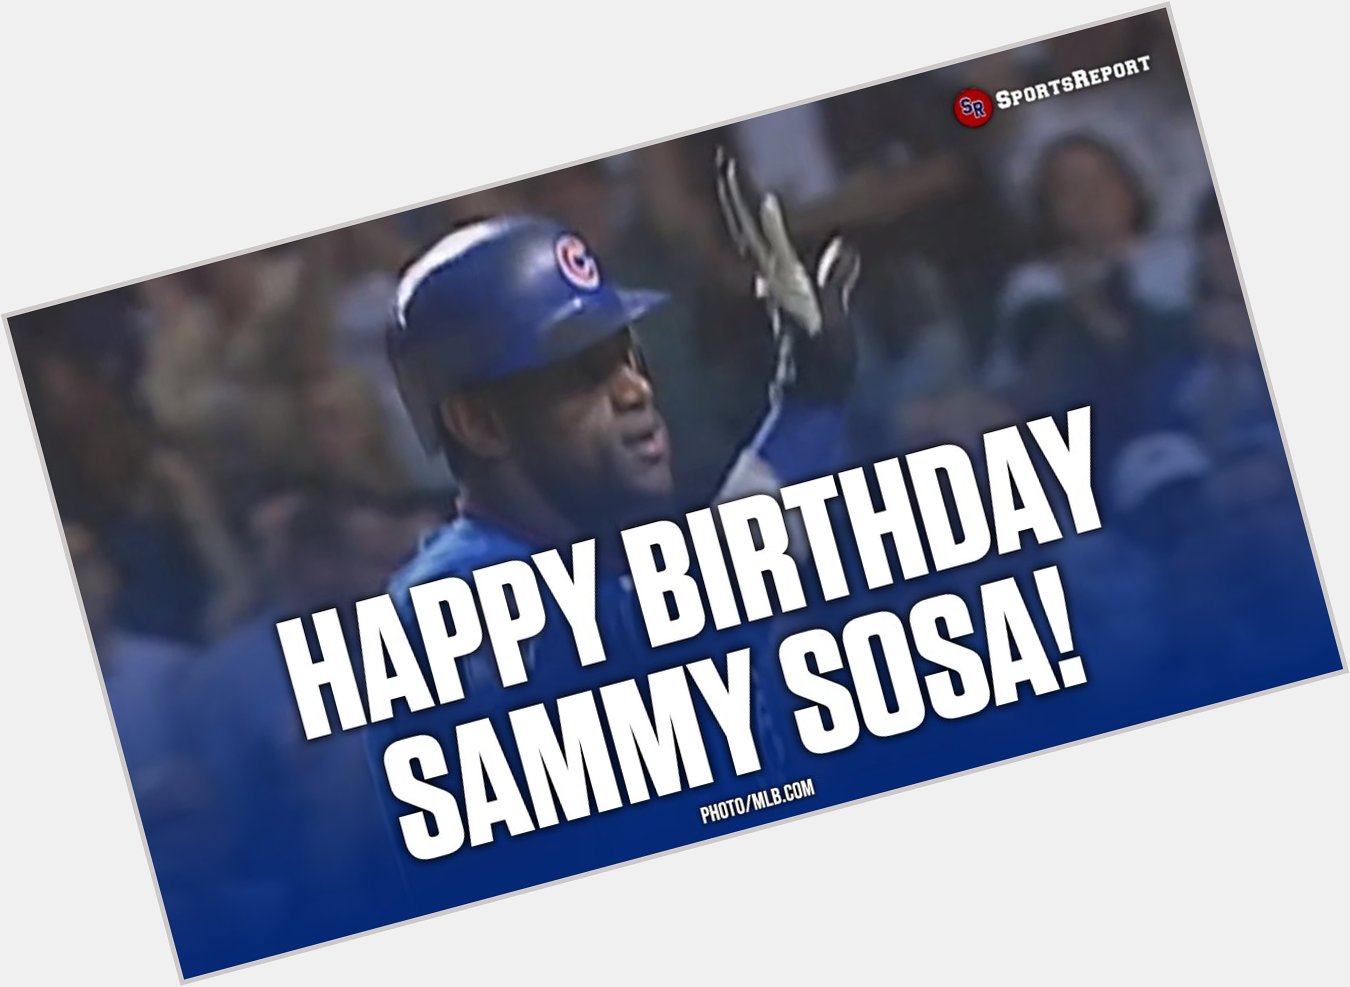  Fans, let\s wish Sammy Sosa a Happy Birthday! GO CUBS!! 